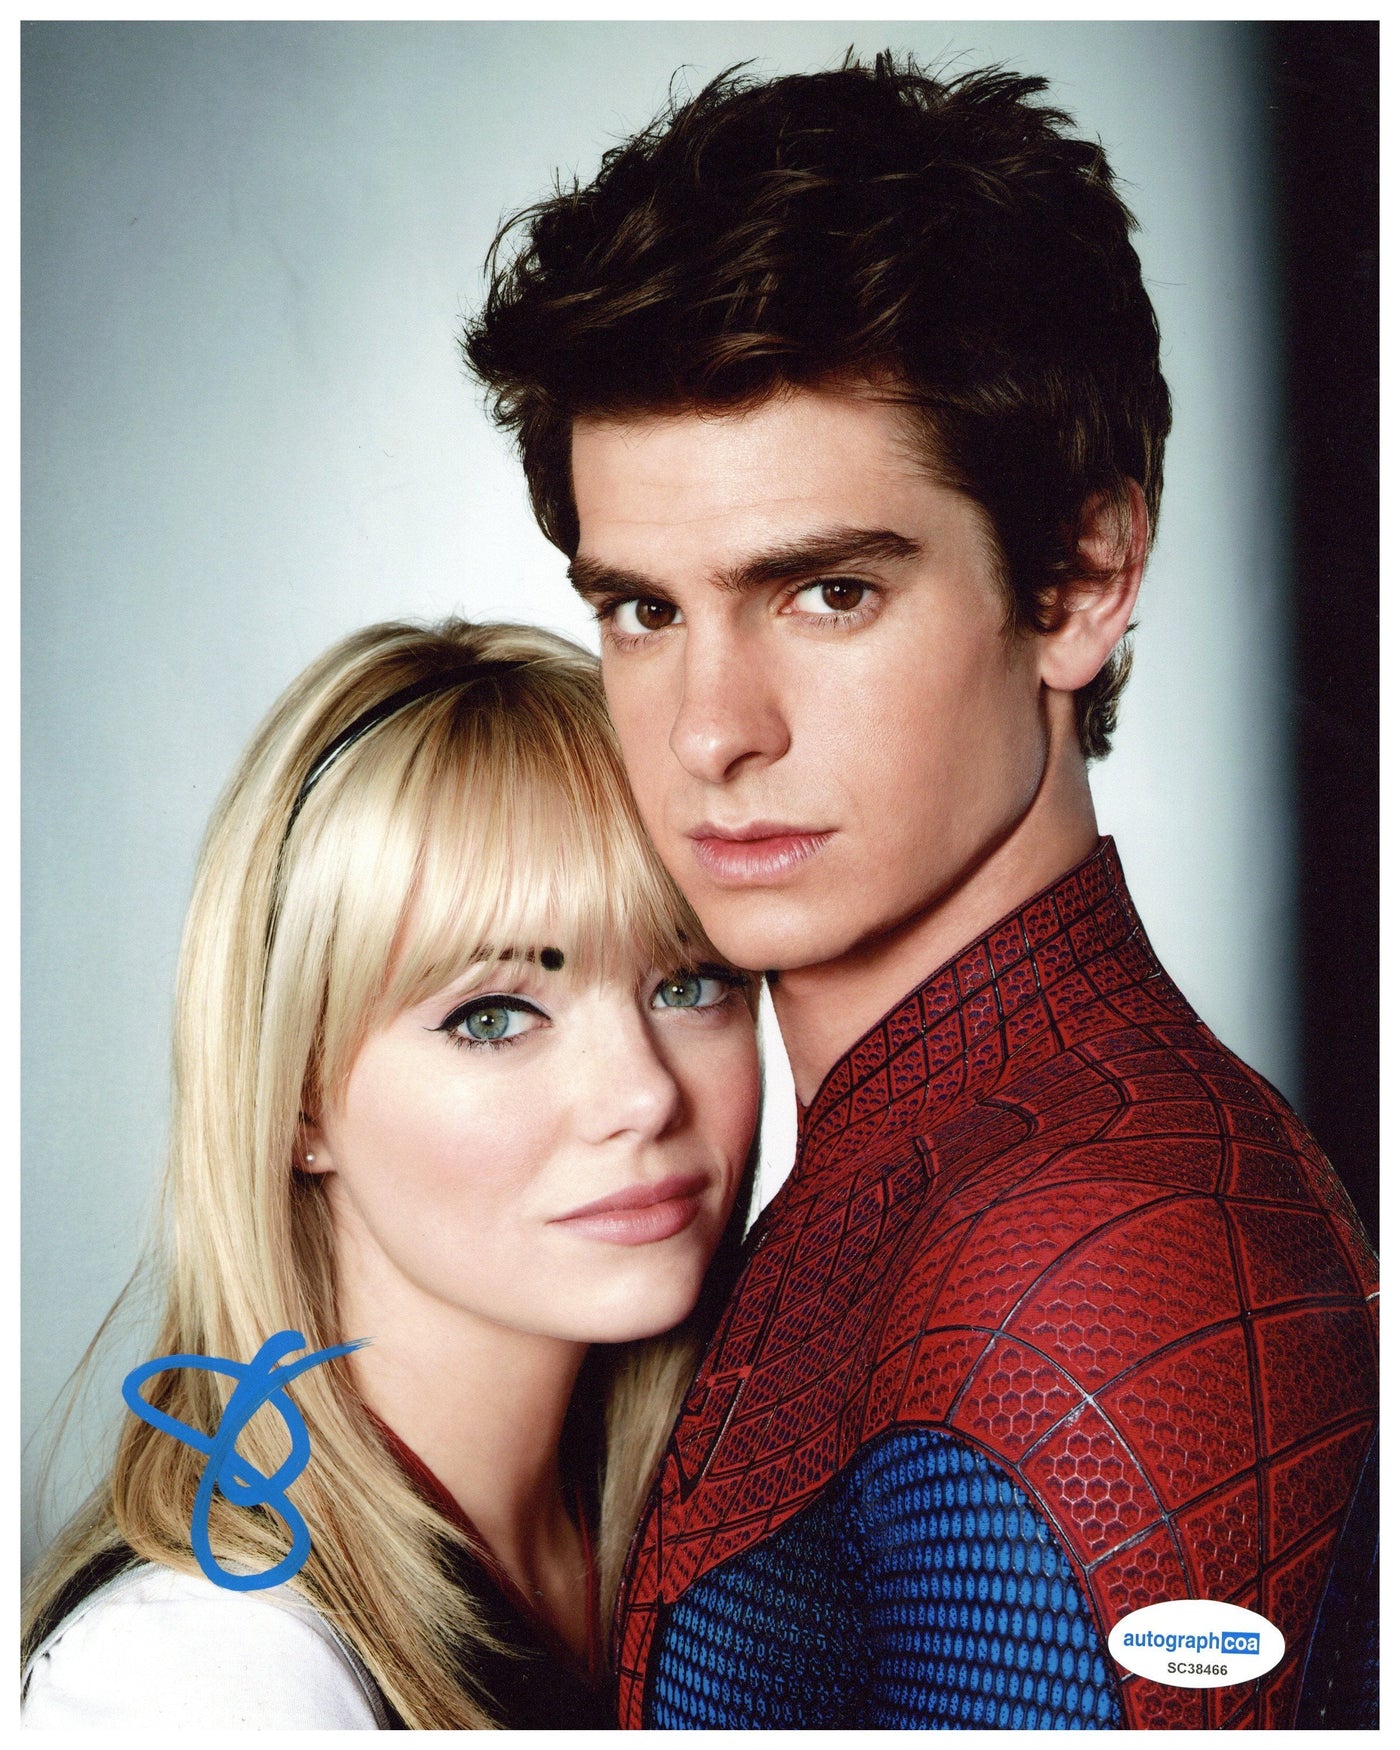 Emma Stone Signed 8x10 Photo Spider-Man Autographed ACOA COA #4